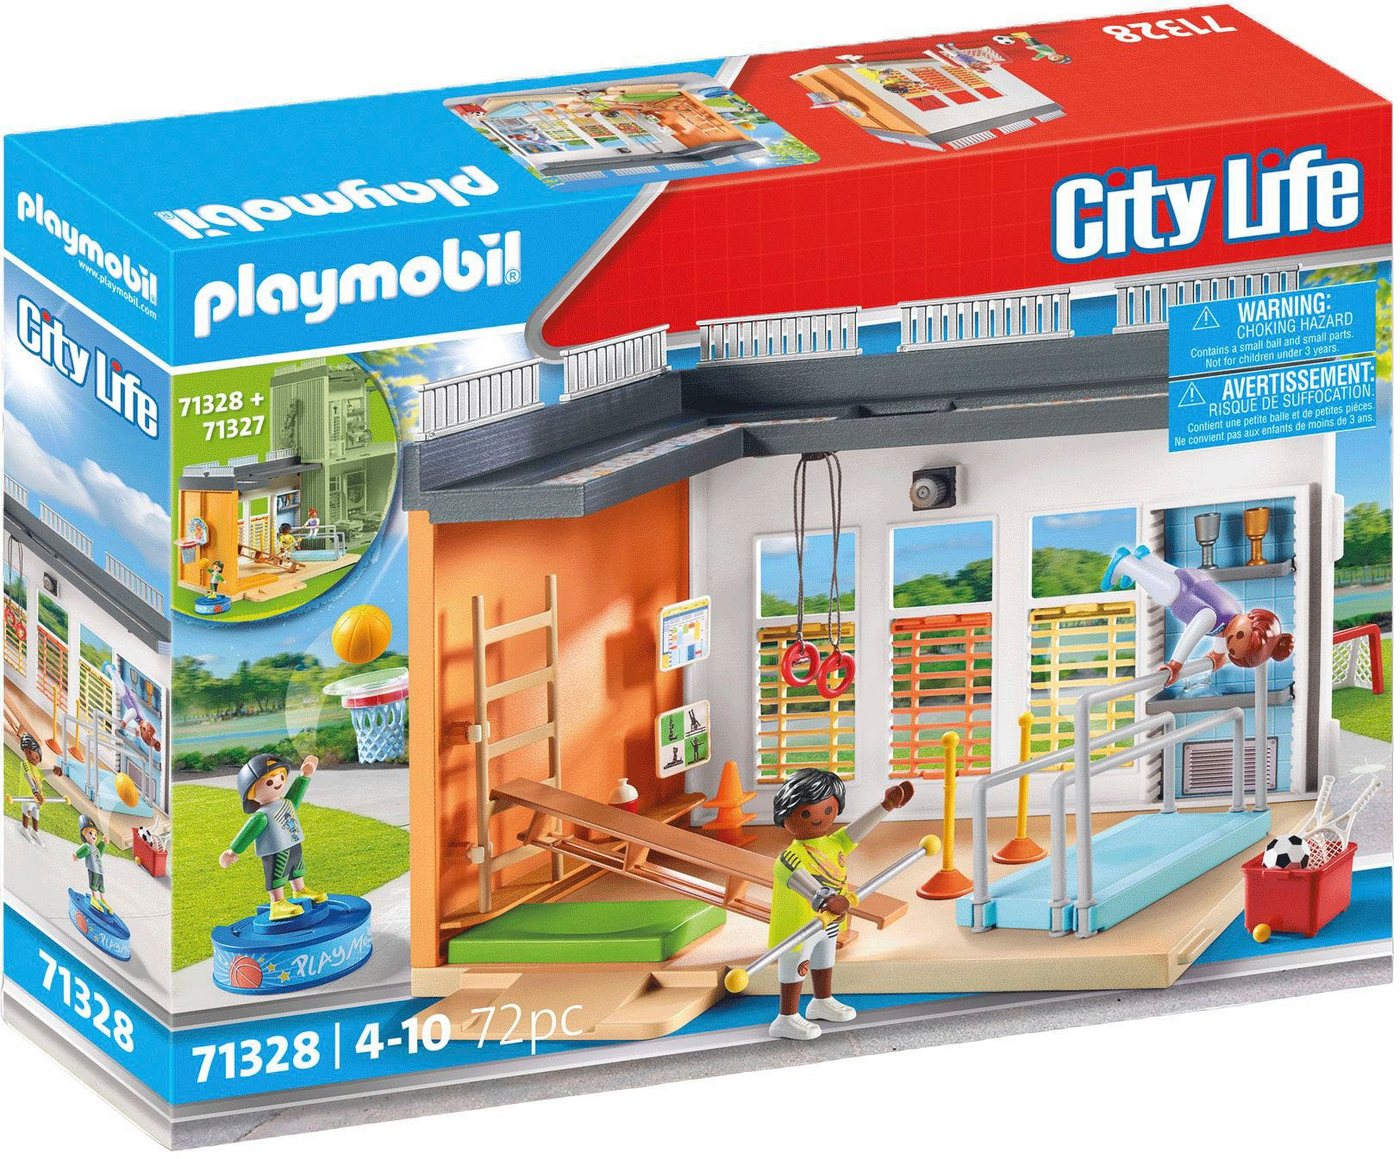 Playmobil® Konstruktions-Spielset Anbau Turnhalle (71328), City Life, (72 St), Made in Germany von Playmobil®